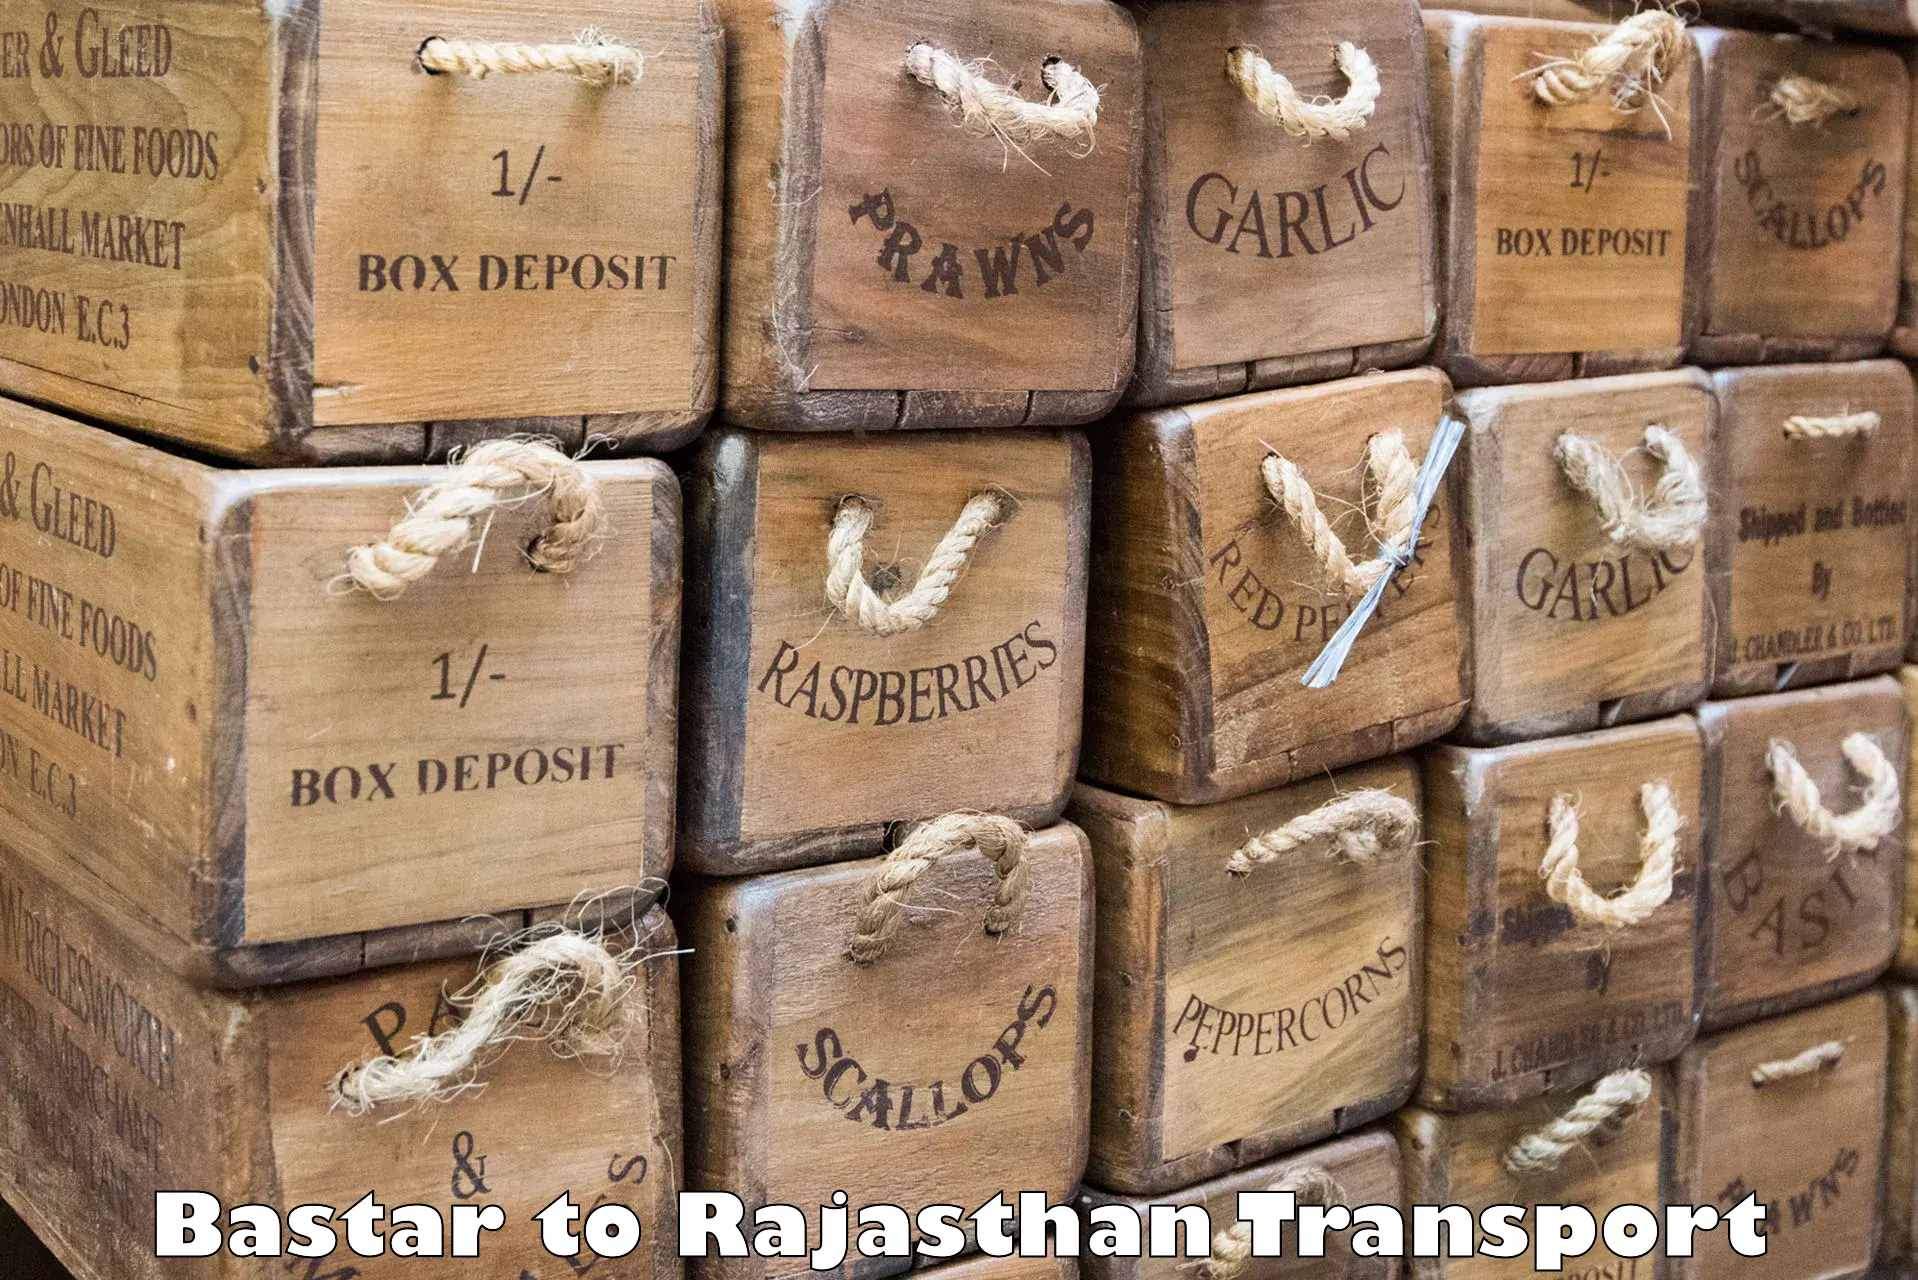 Online transport service Bastar to Bikaner